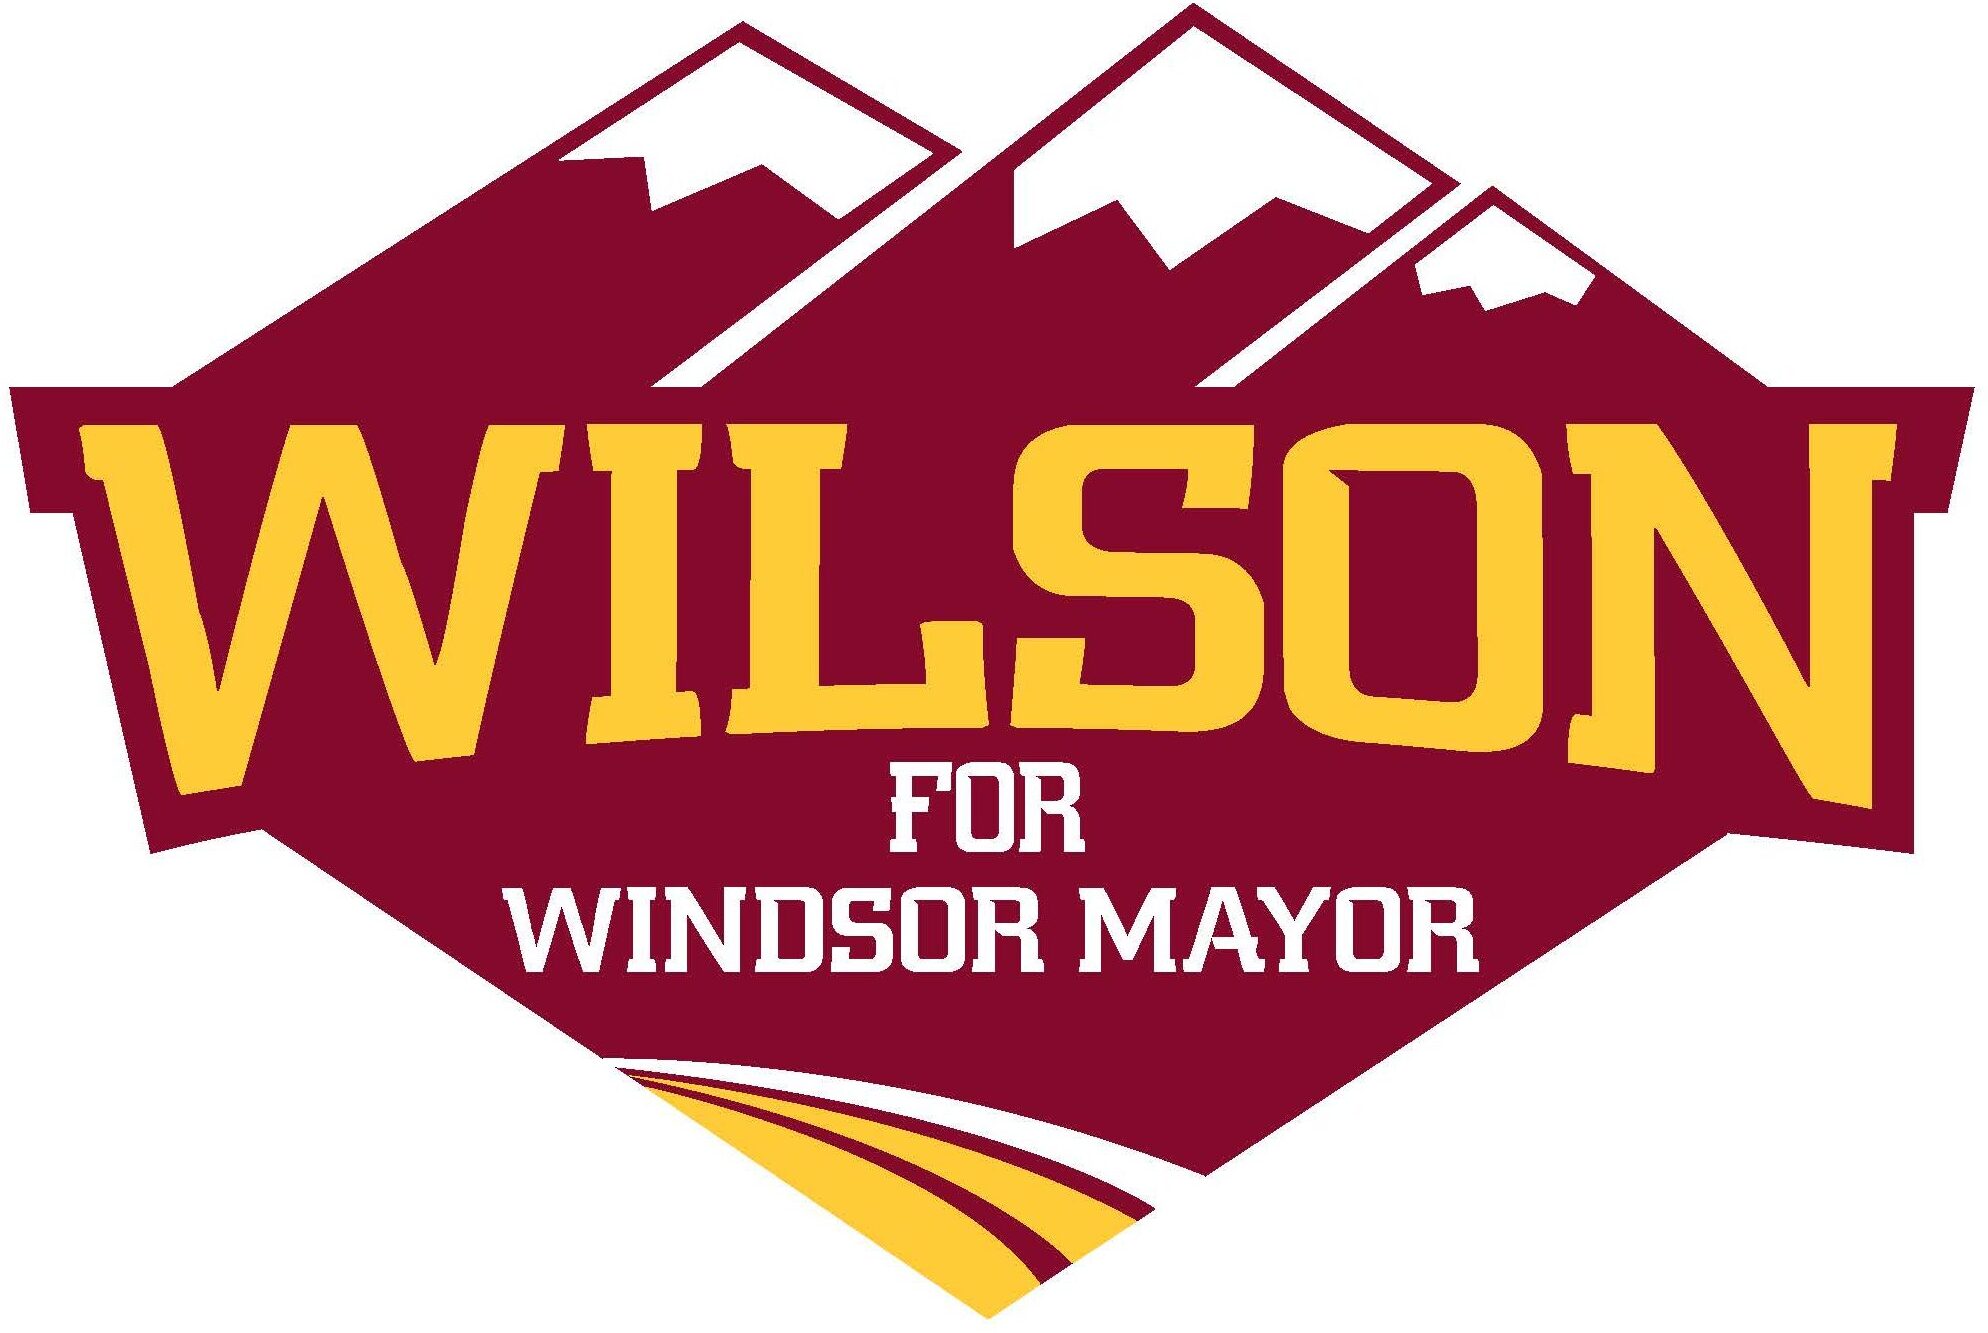 Barry Wilson, Mayor of Windsor, Colorado